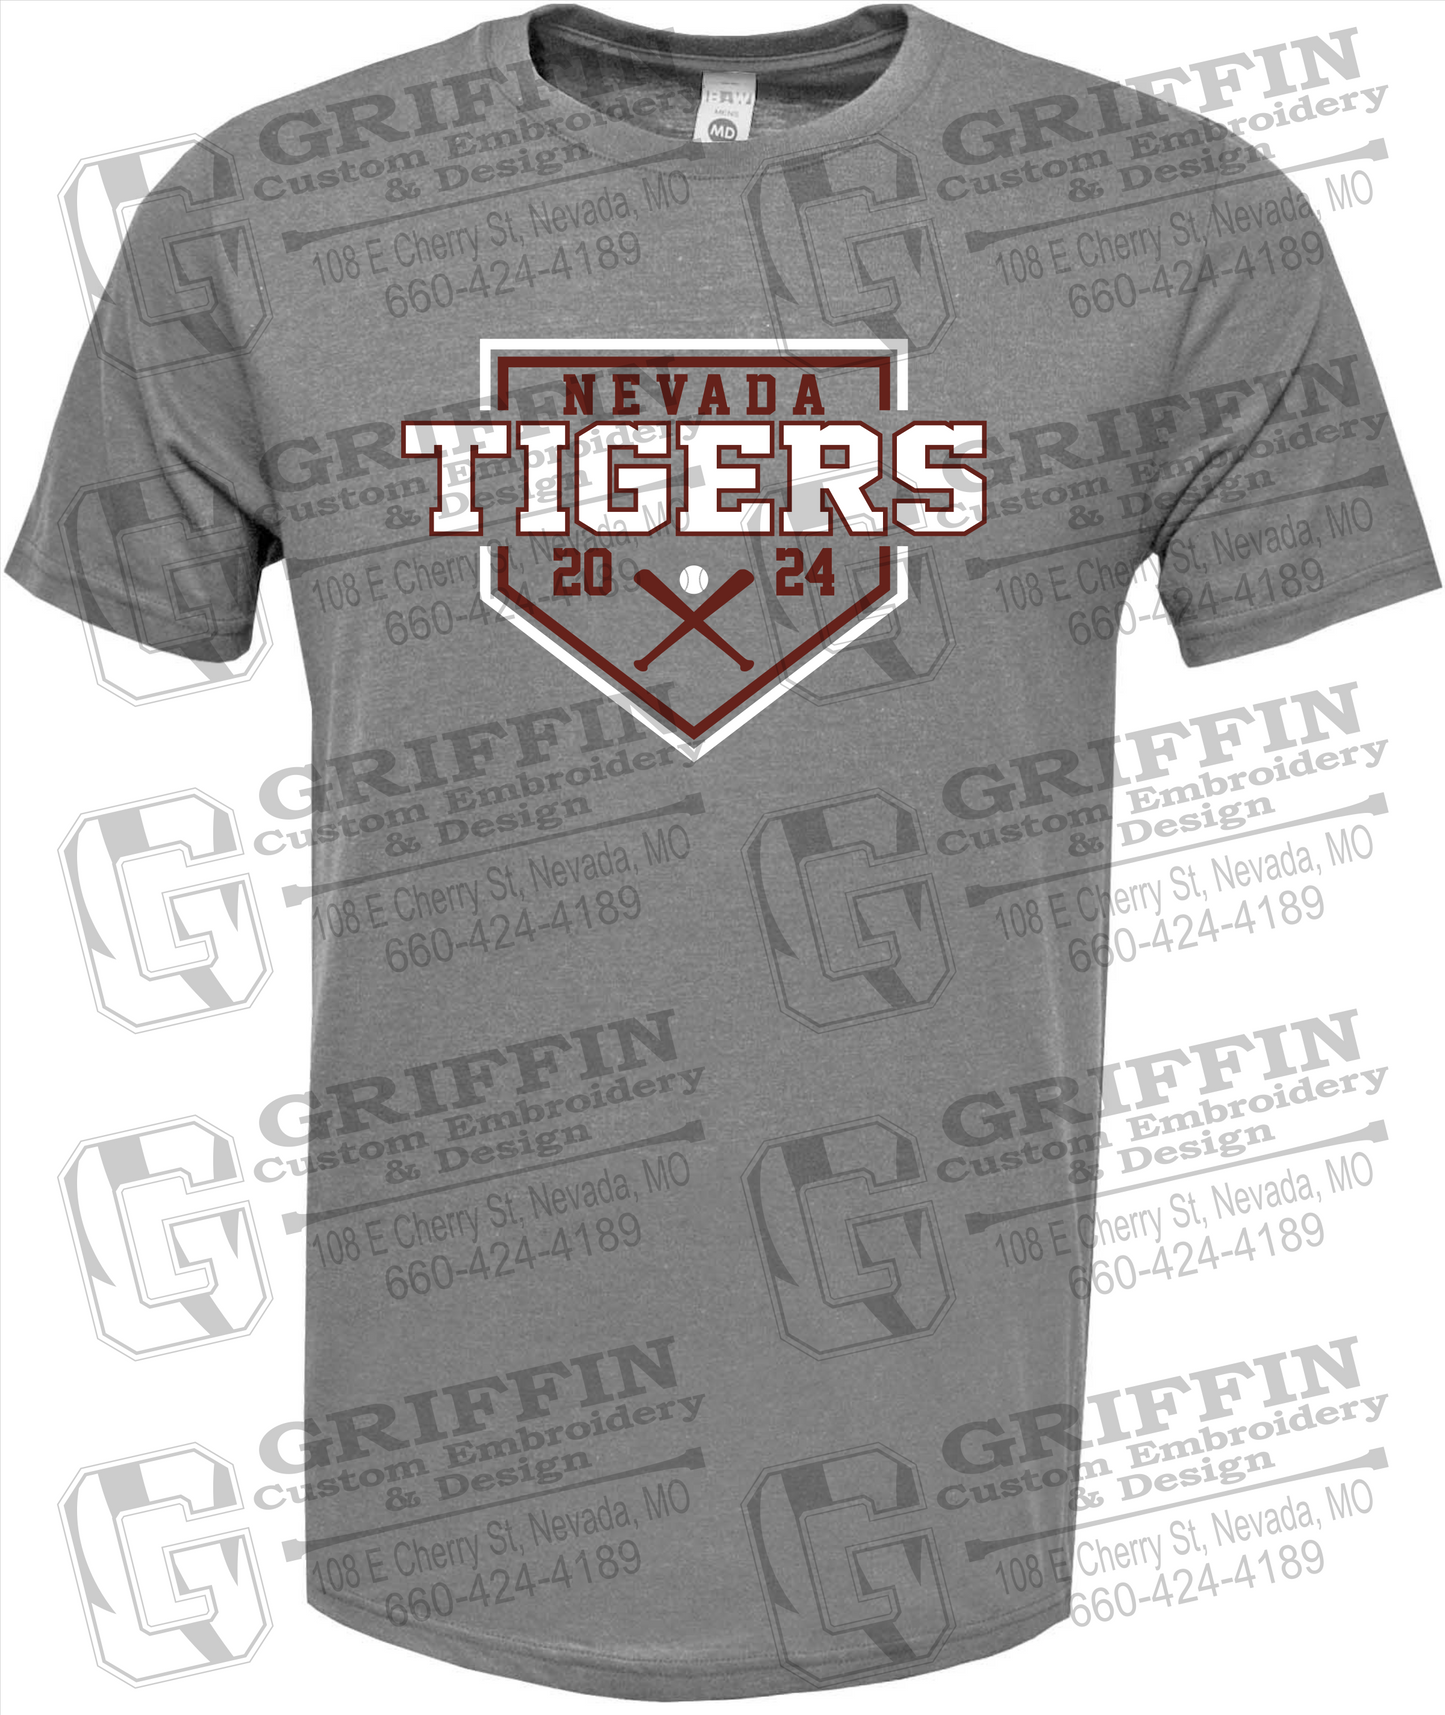 Soft-Tek Short Sleeve T-Shirt - Baseball - Nevada Tigers 25-A